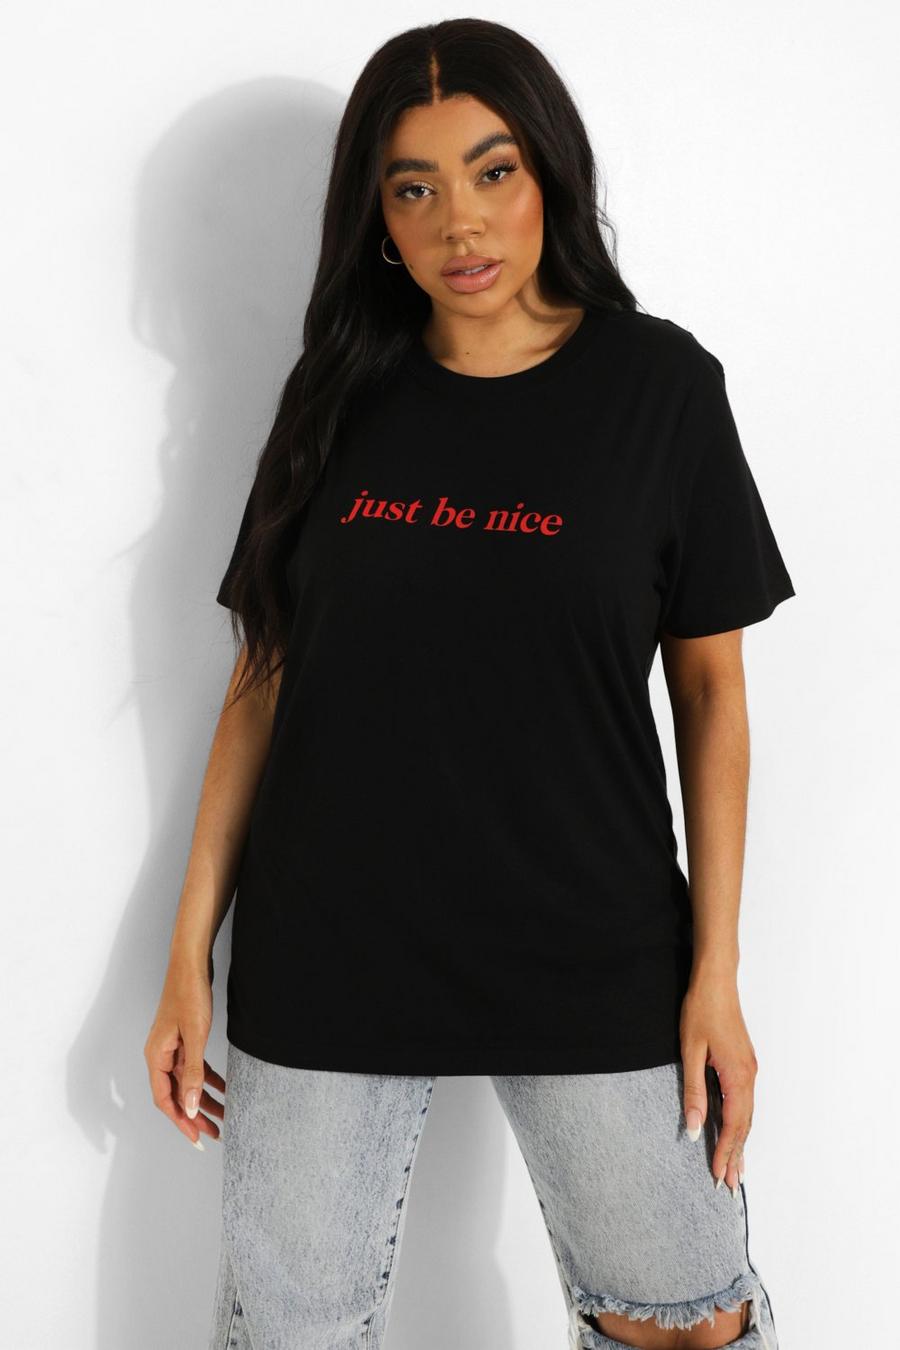 Plus T-Shirt mit Be Nice Slogan, Schwarz black